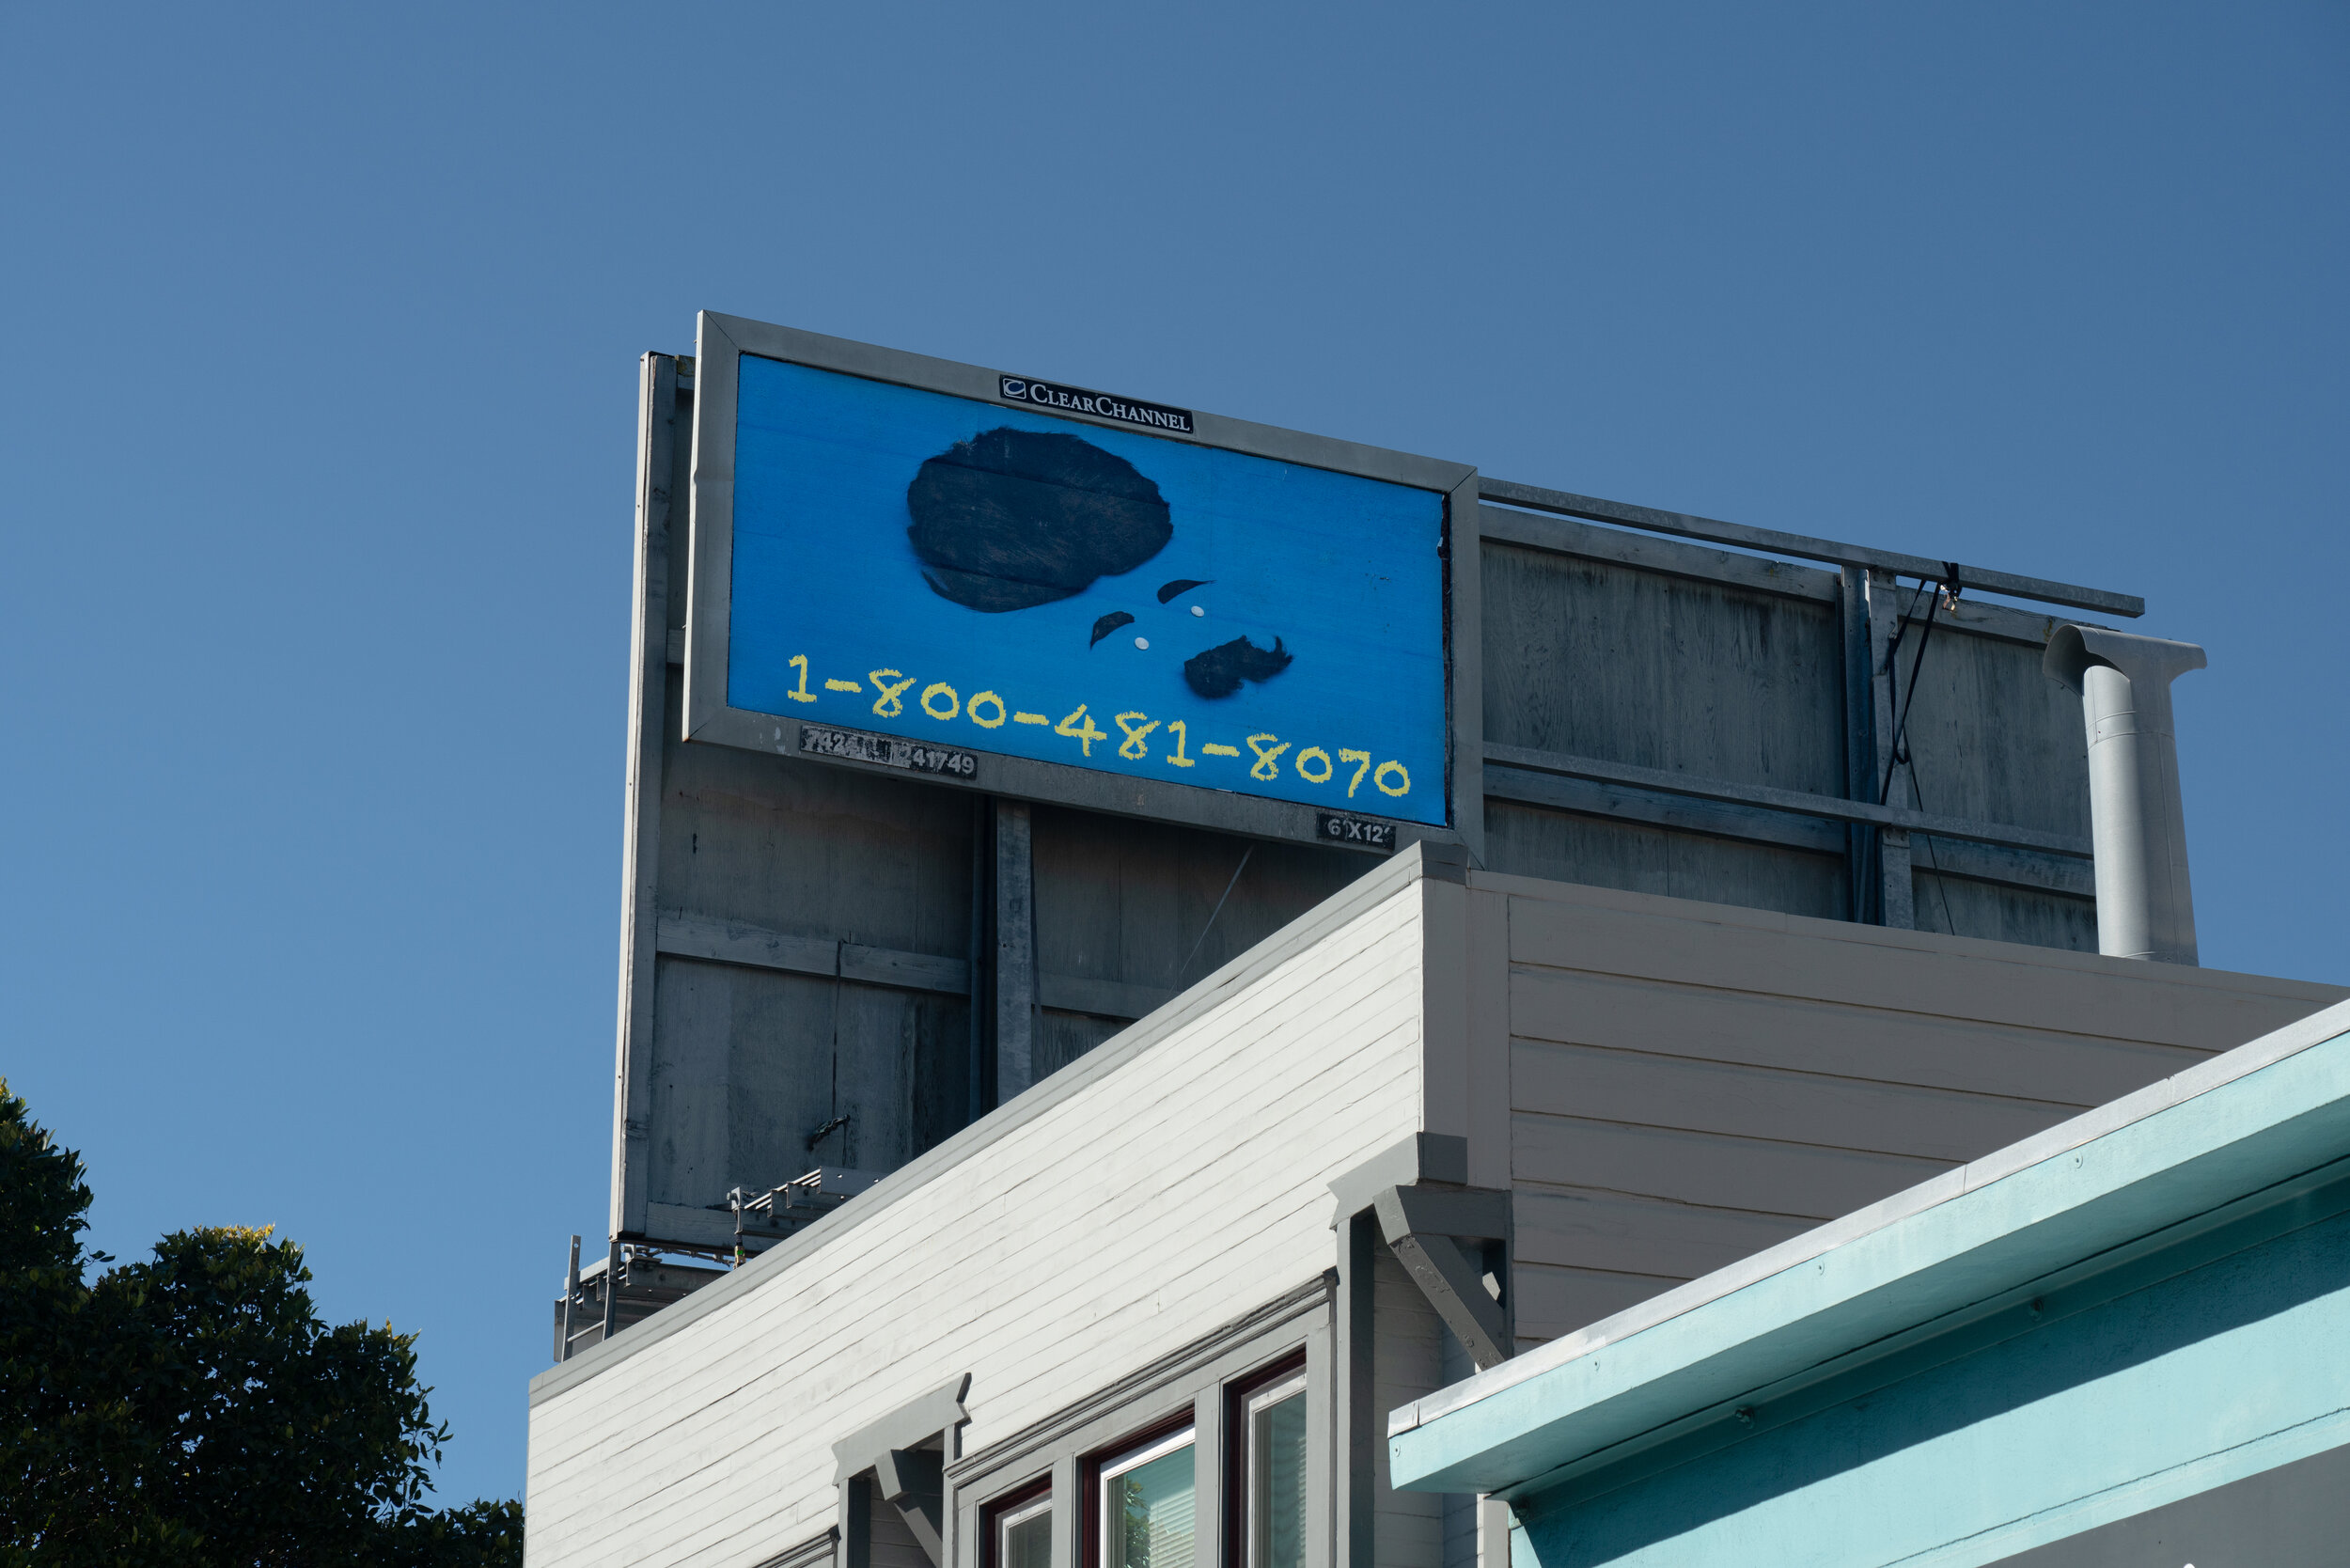 Billboard Project, San Francisco